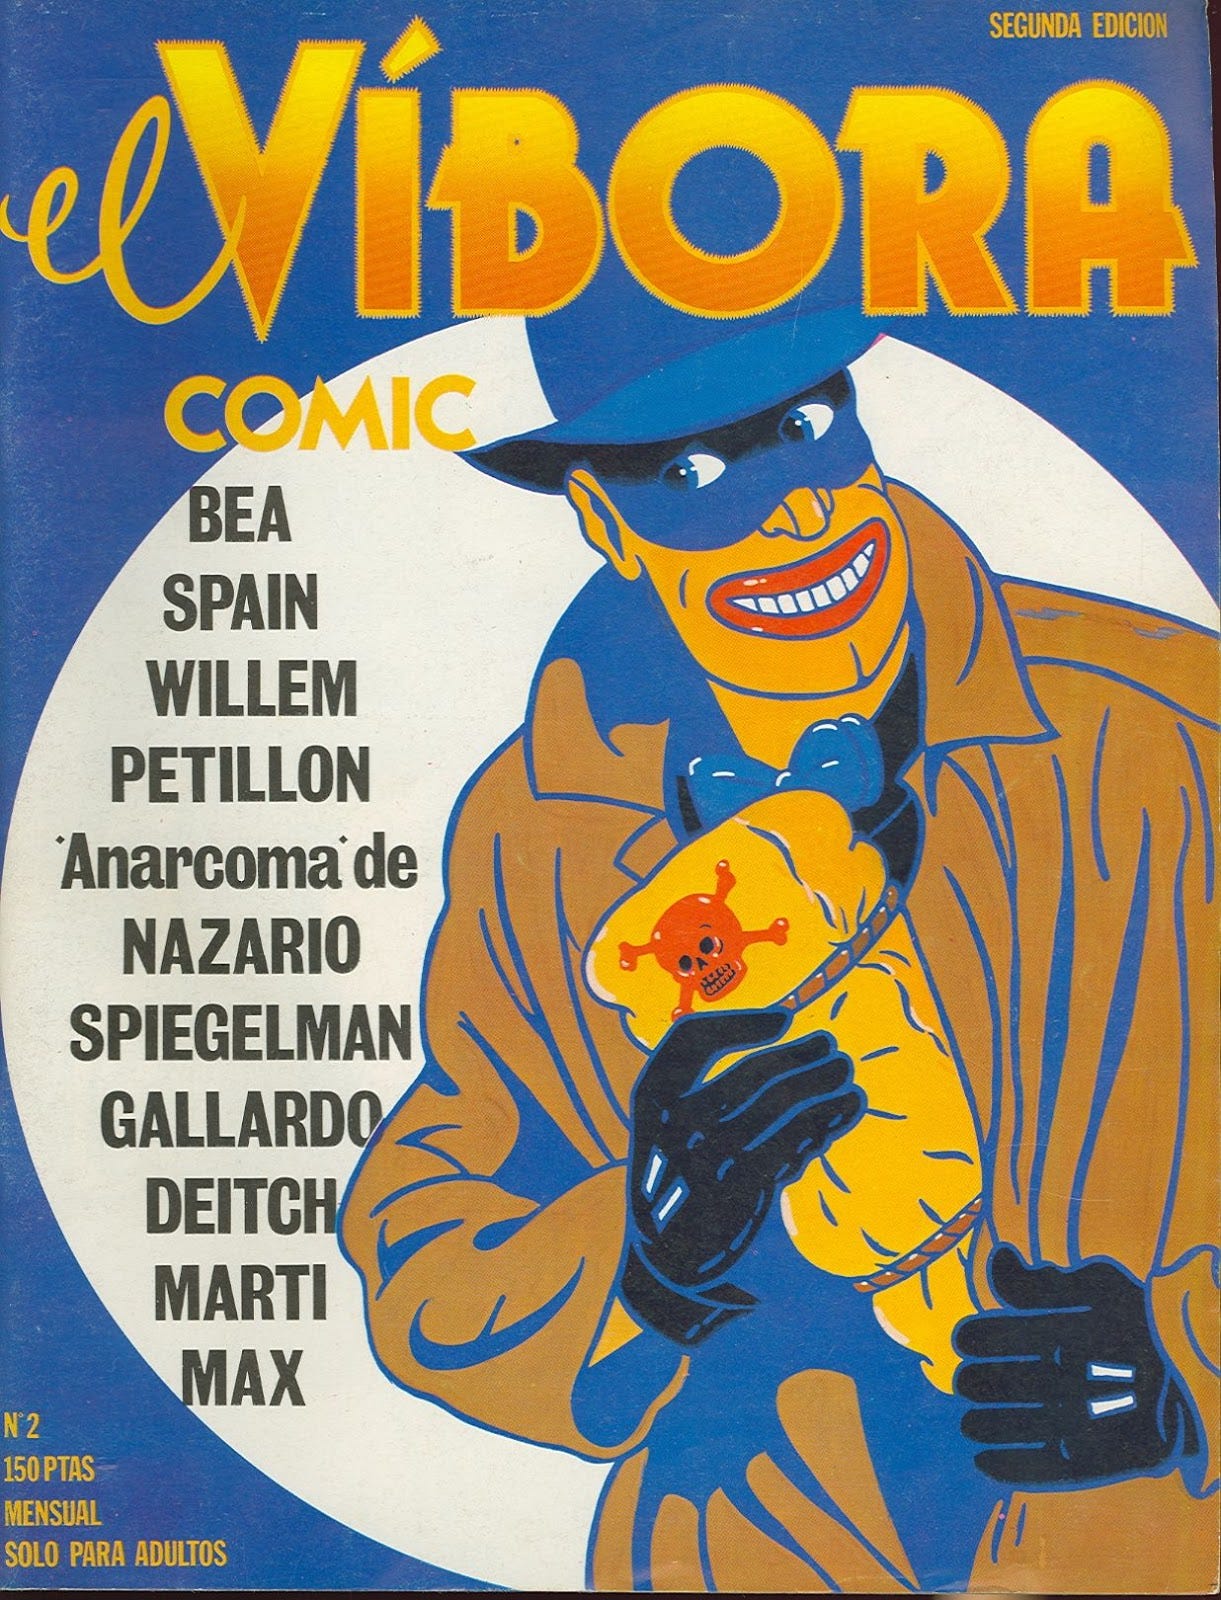 El Vibora. 40 years of Comix for survivors | by VBAT Refreshing | Inside  VBAT | Medium